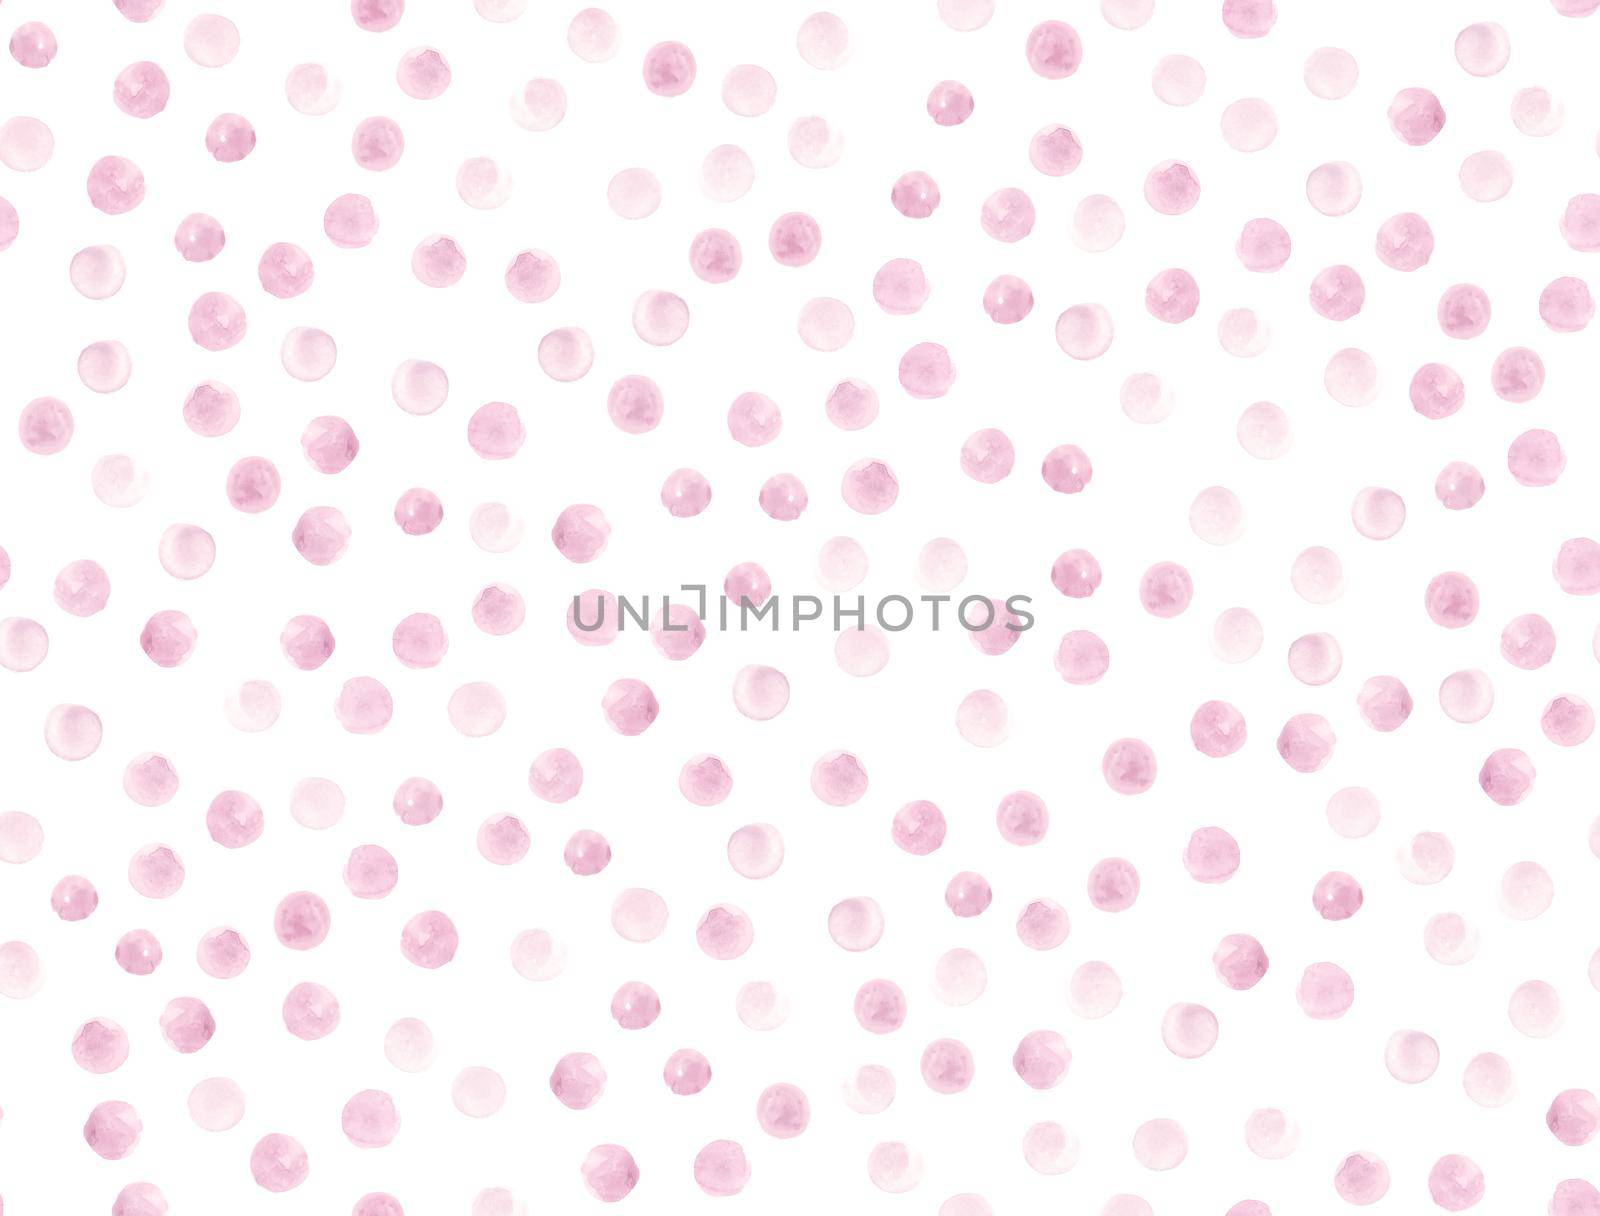 Seamless Rose Watercolor Circles. Grunge Abstract Dots Wallpaper. Vintage Hand Paint Print. Cute Pink Watercolor Circles. Rounds Texture. Pastel Spots Background. Rose Watercolor Circles.